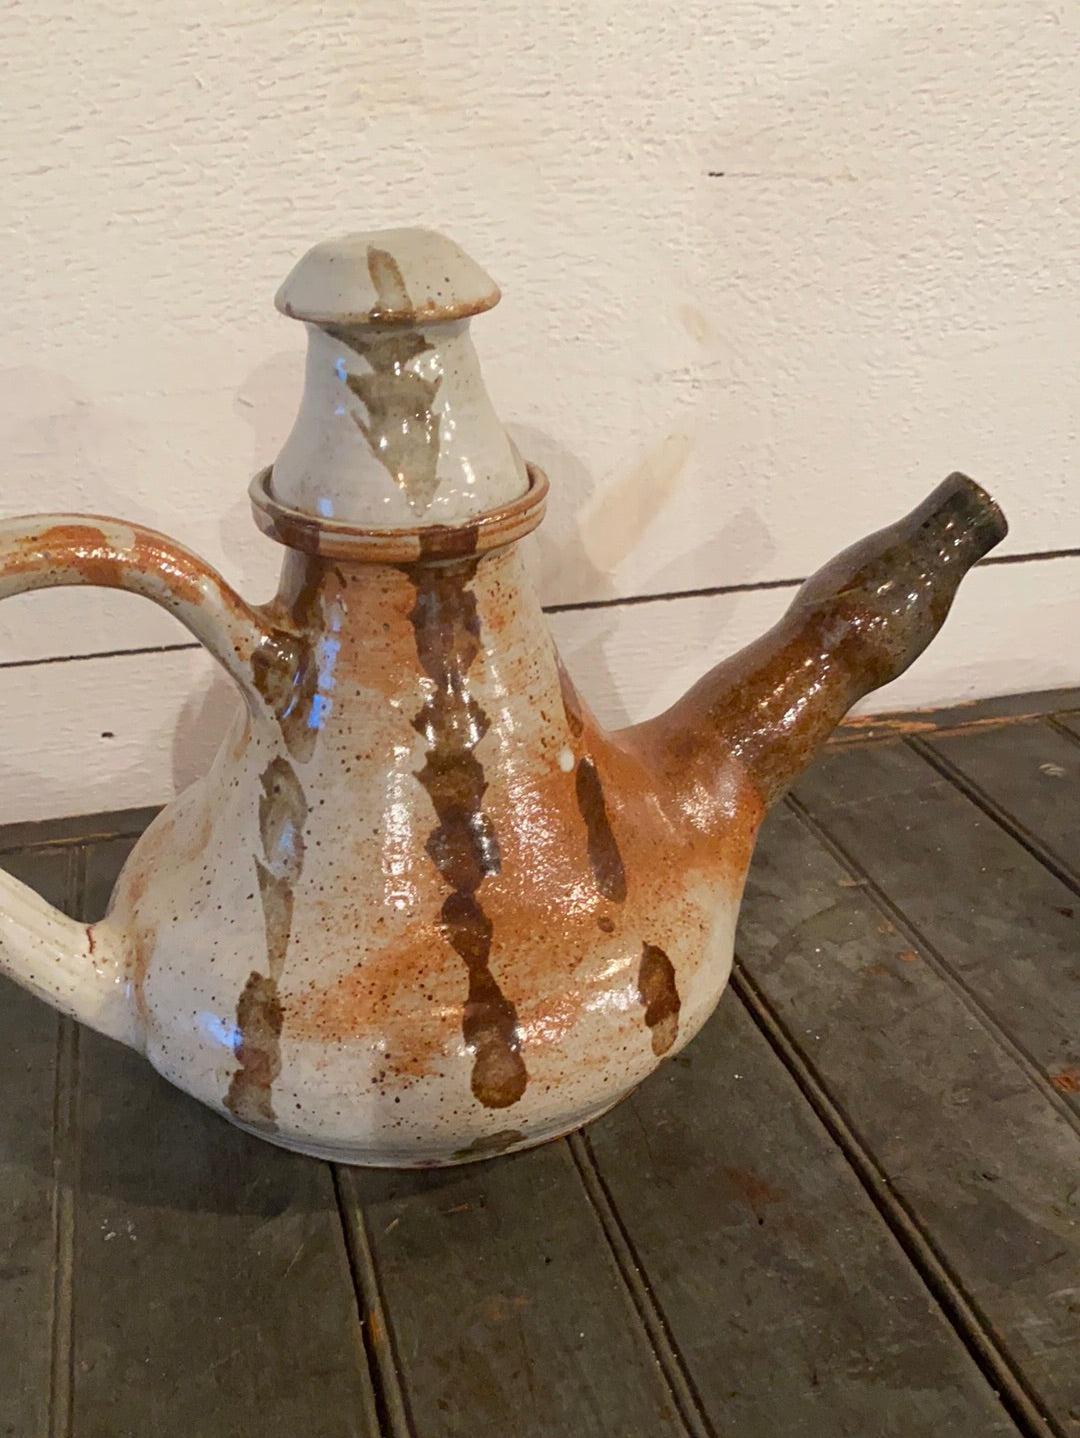 Handmade Ceramic Tea Pot